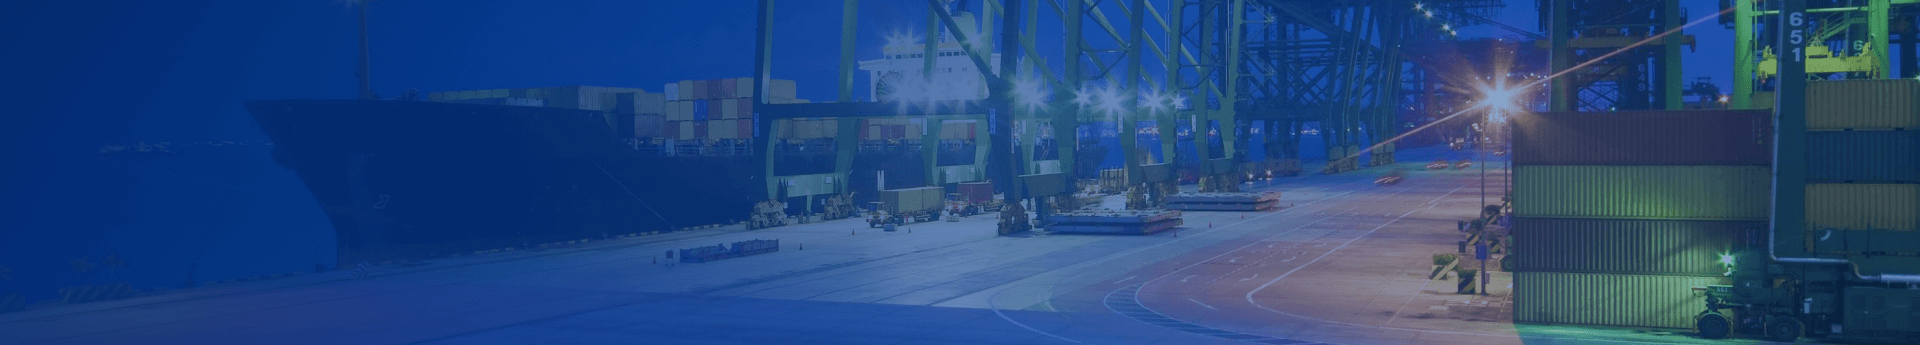 Foto ilustrativa de um porto